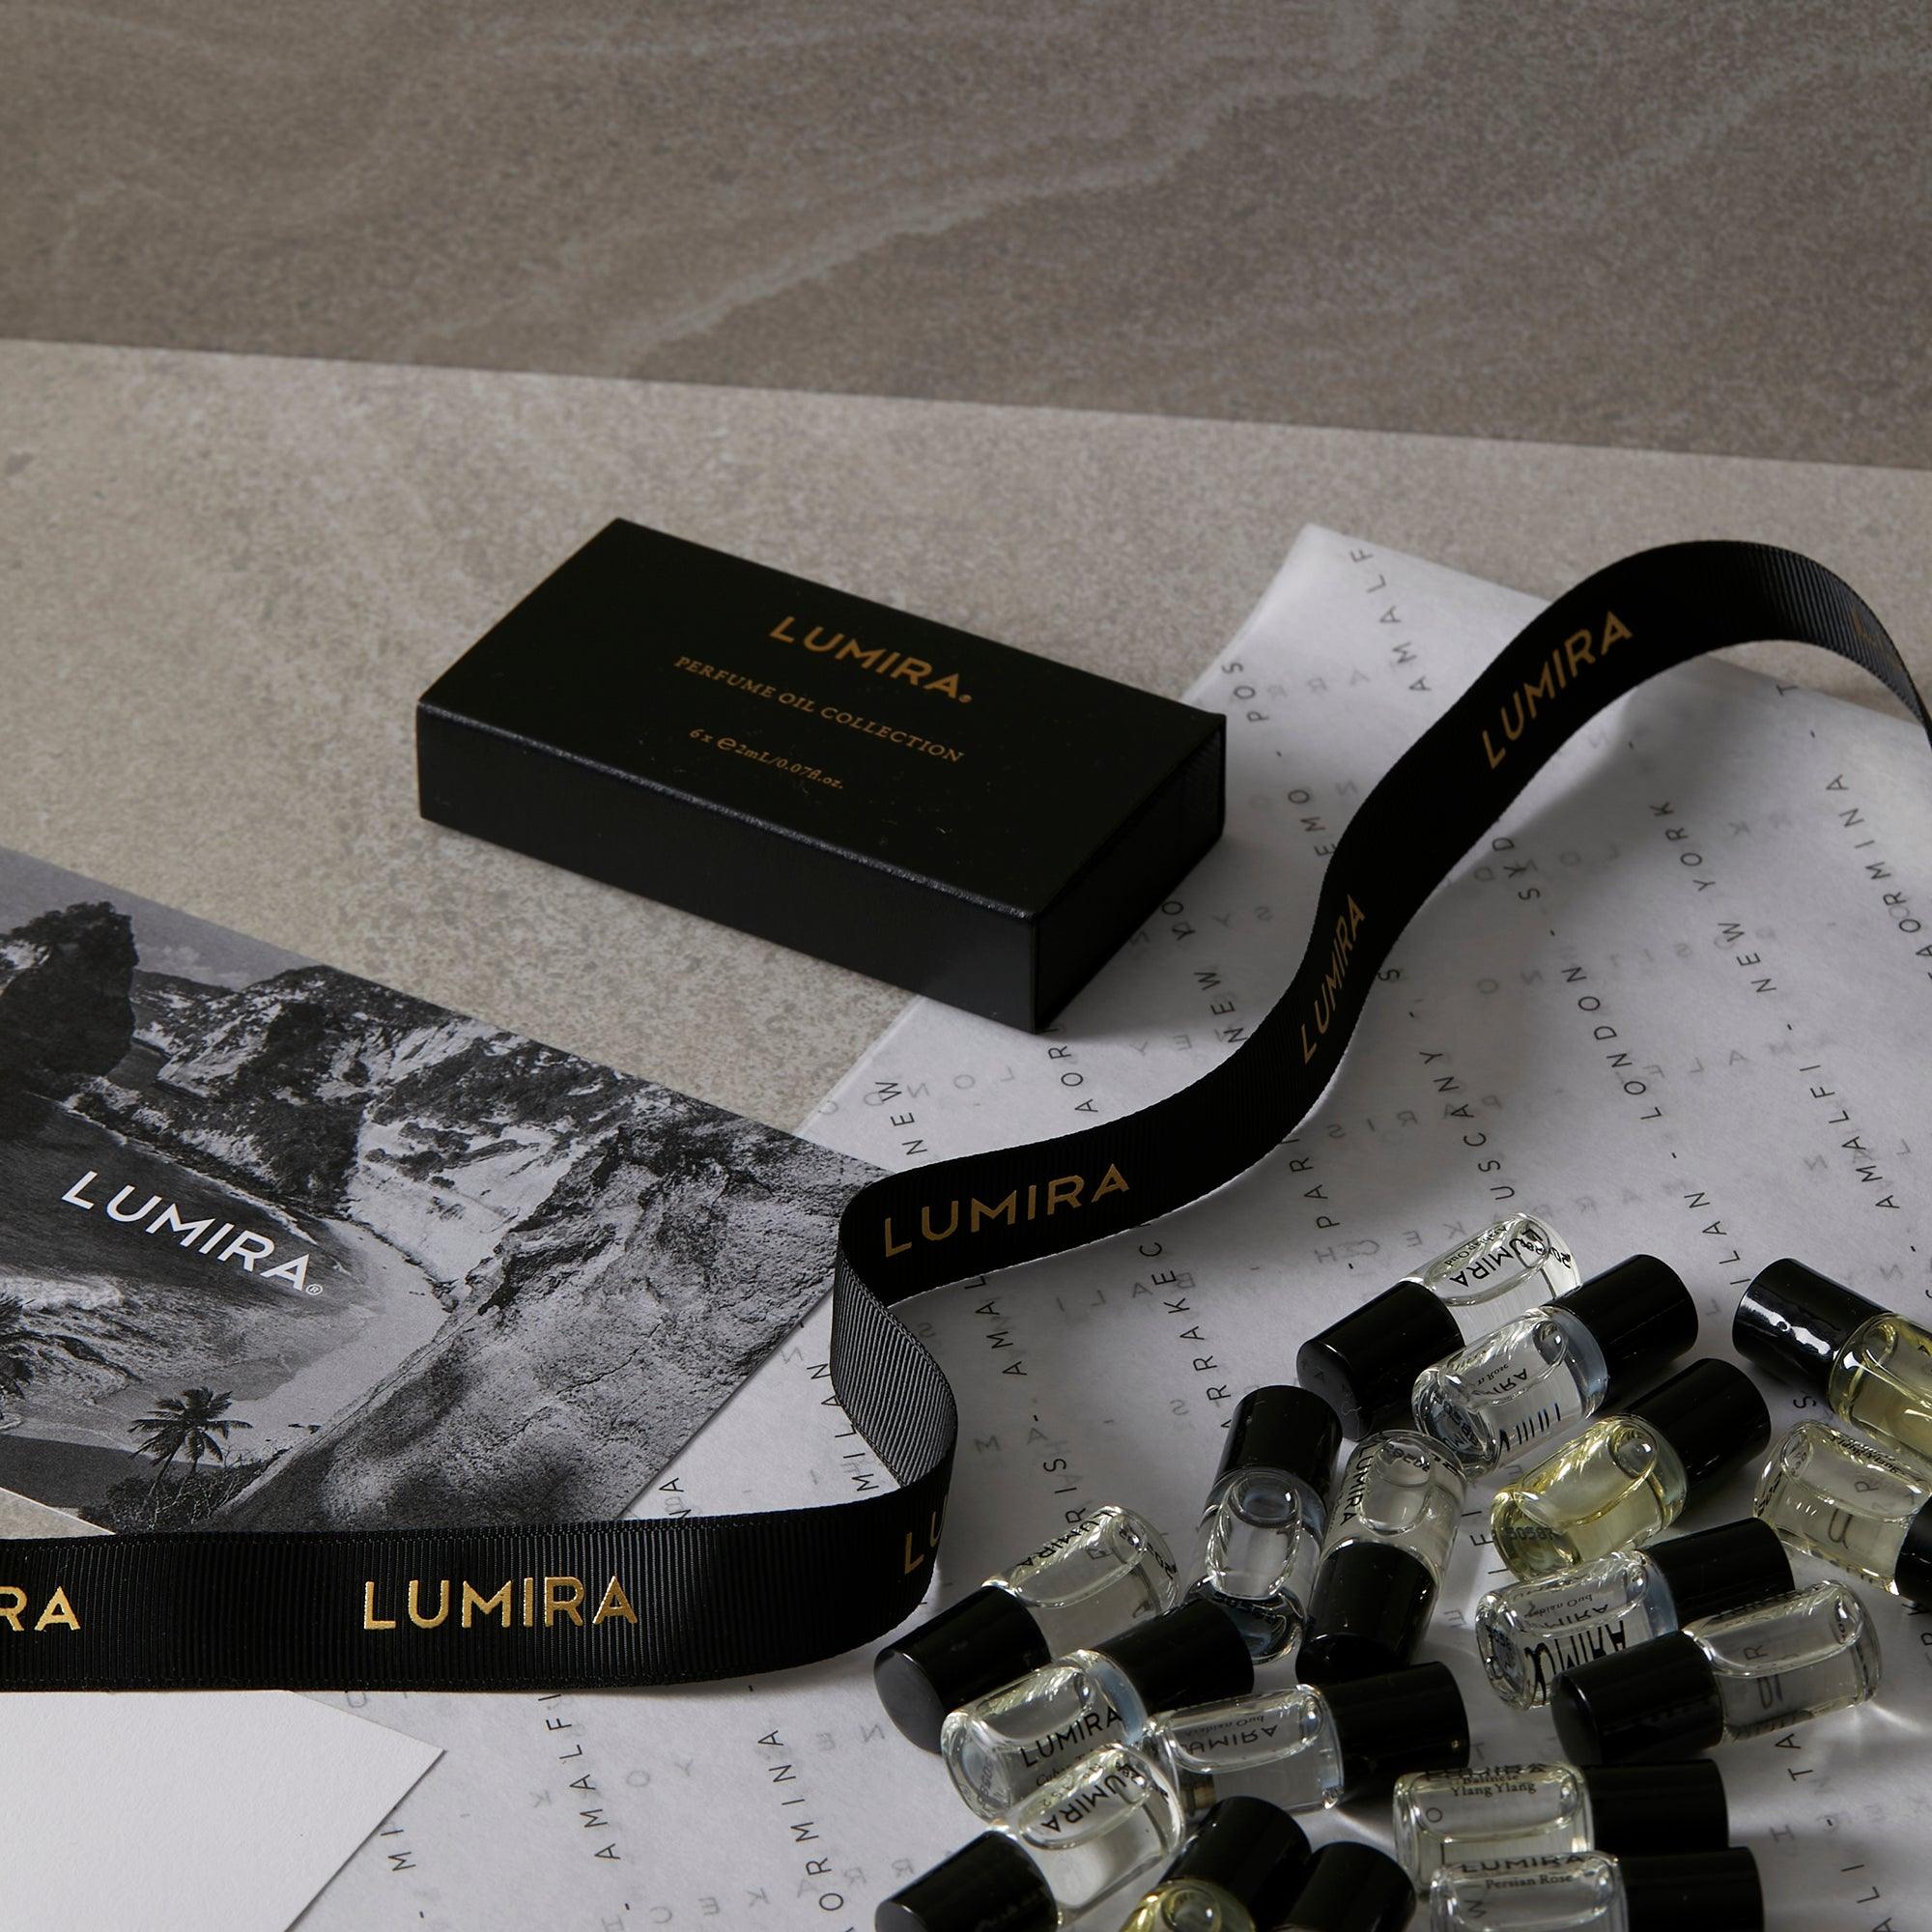 Perfume Oil Discovery Set - LUMIRA